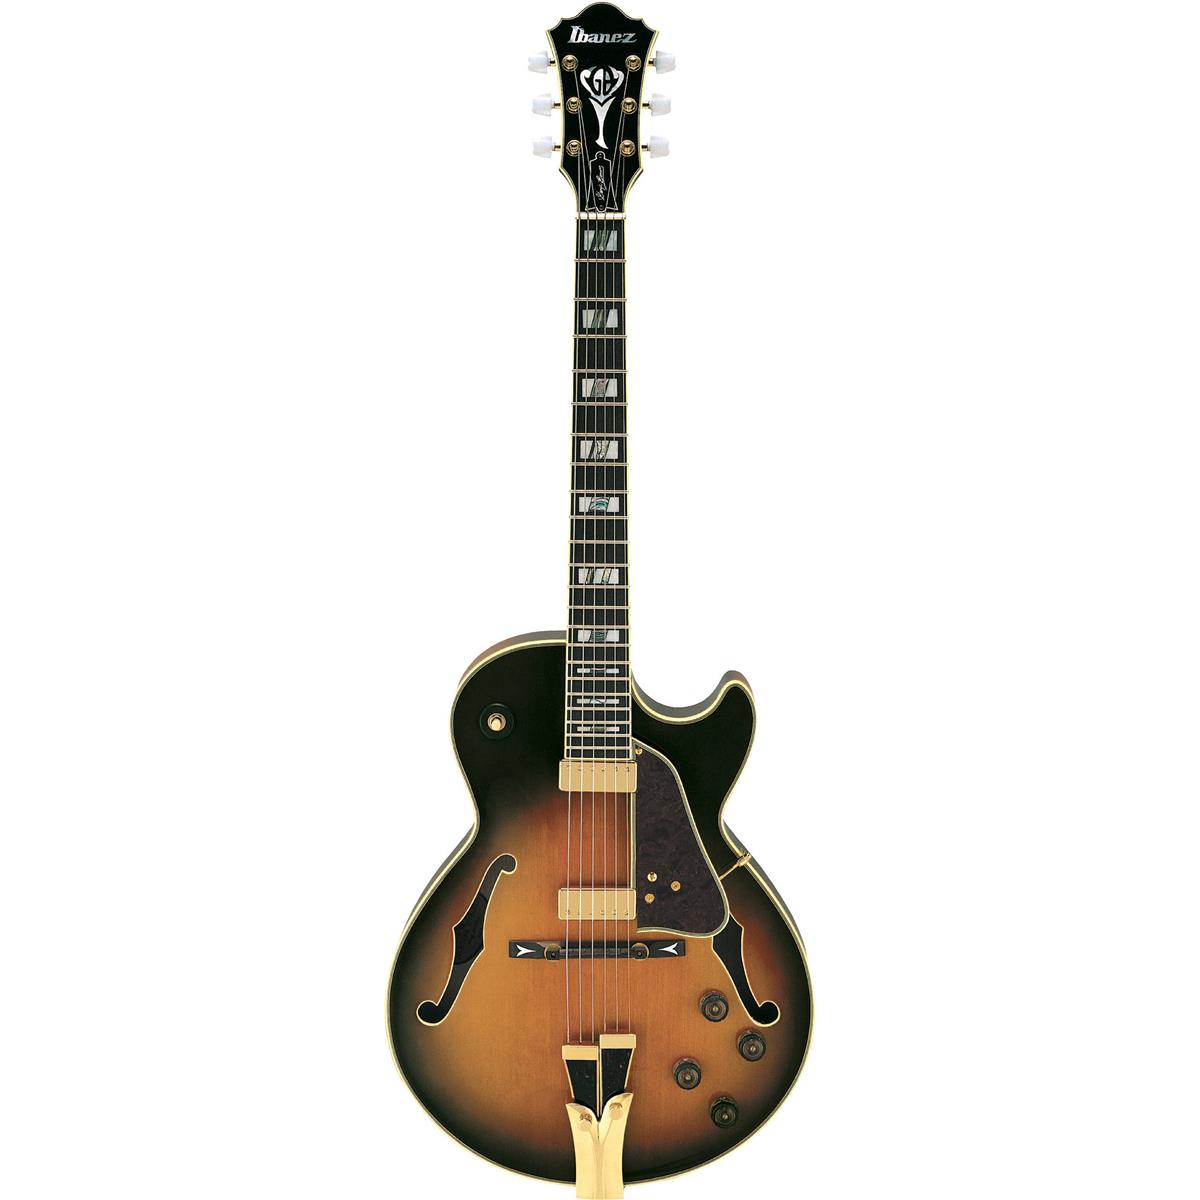 Ibanez George Benson Signature GB10 Hollow Body Electric Guitar, Brown Sunburst -  GB10BS